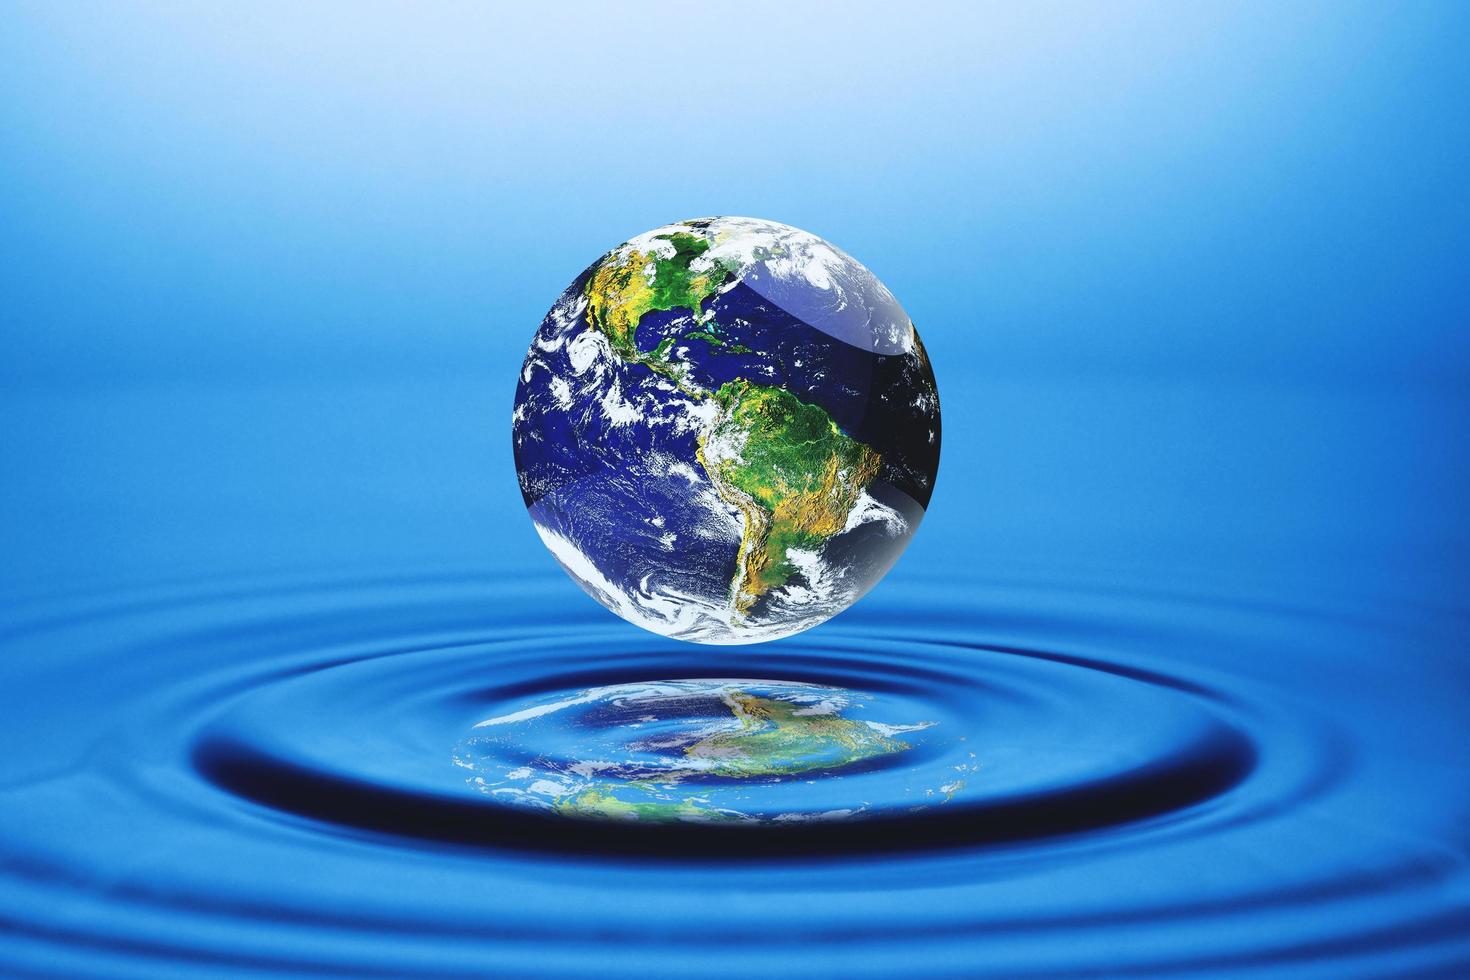 Quanta acqua c’è sul pianeta terra?